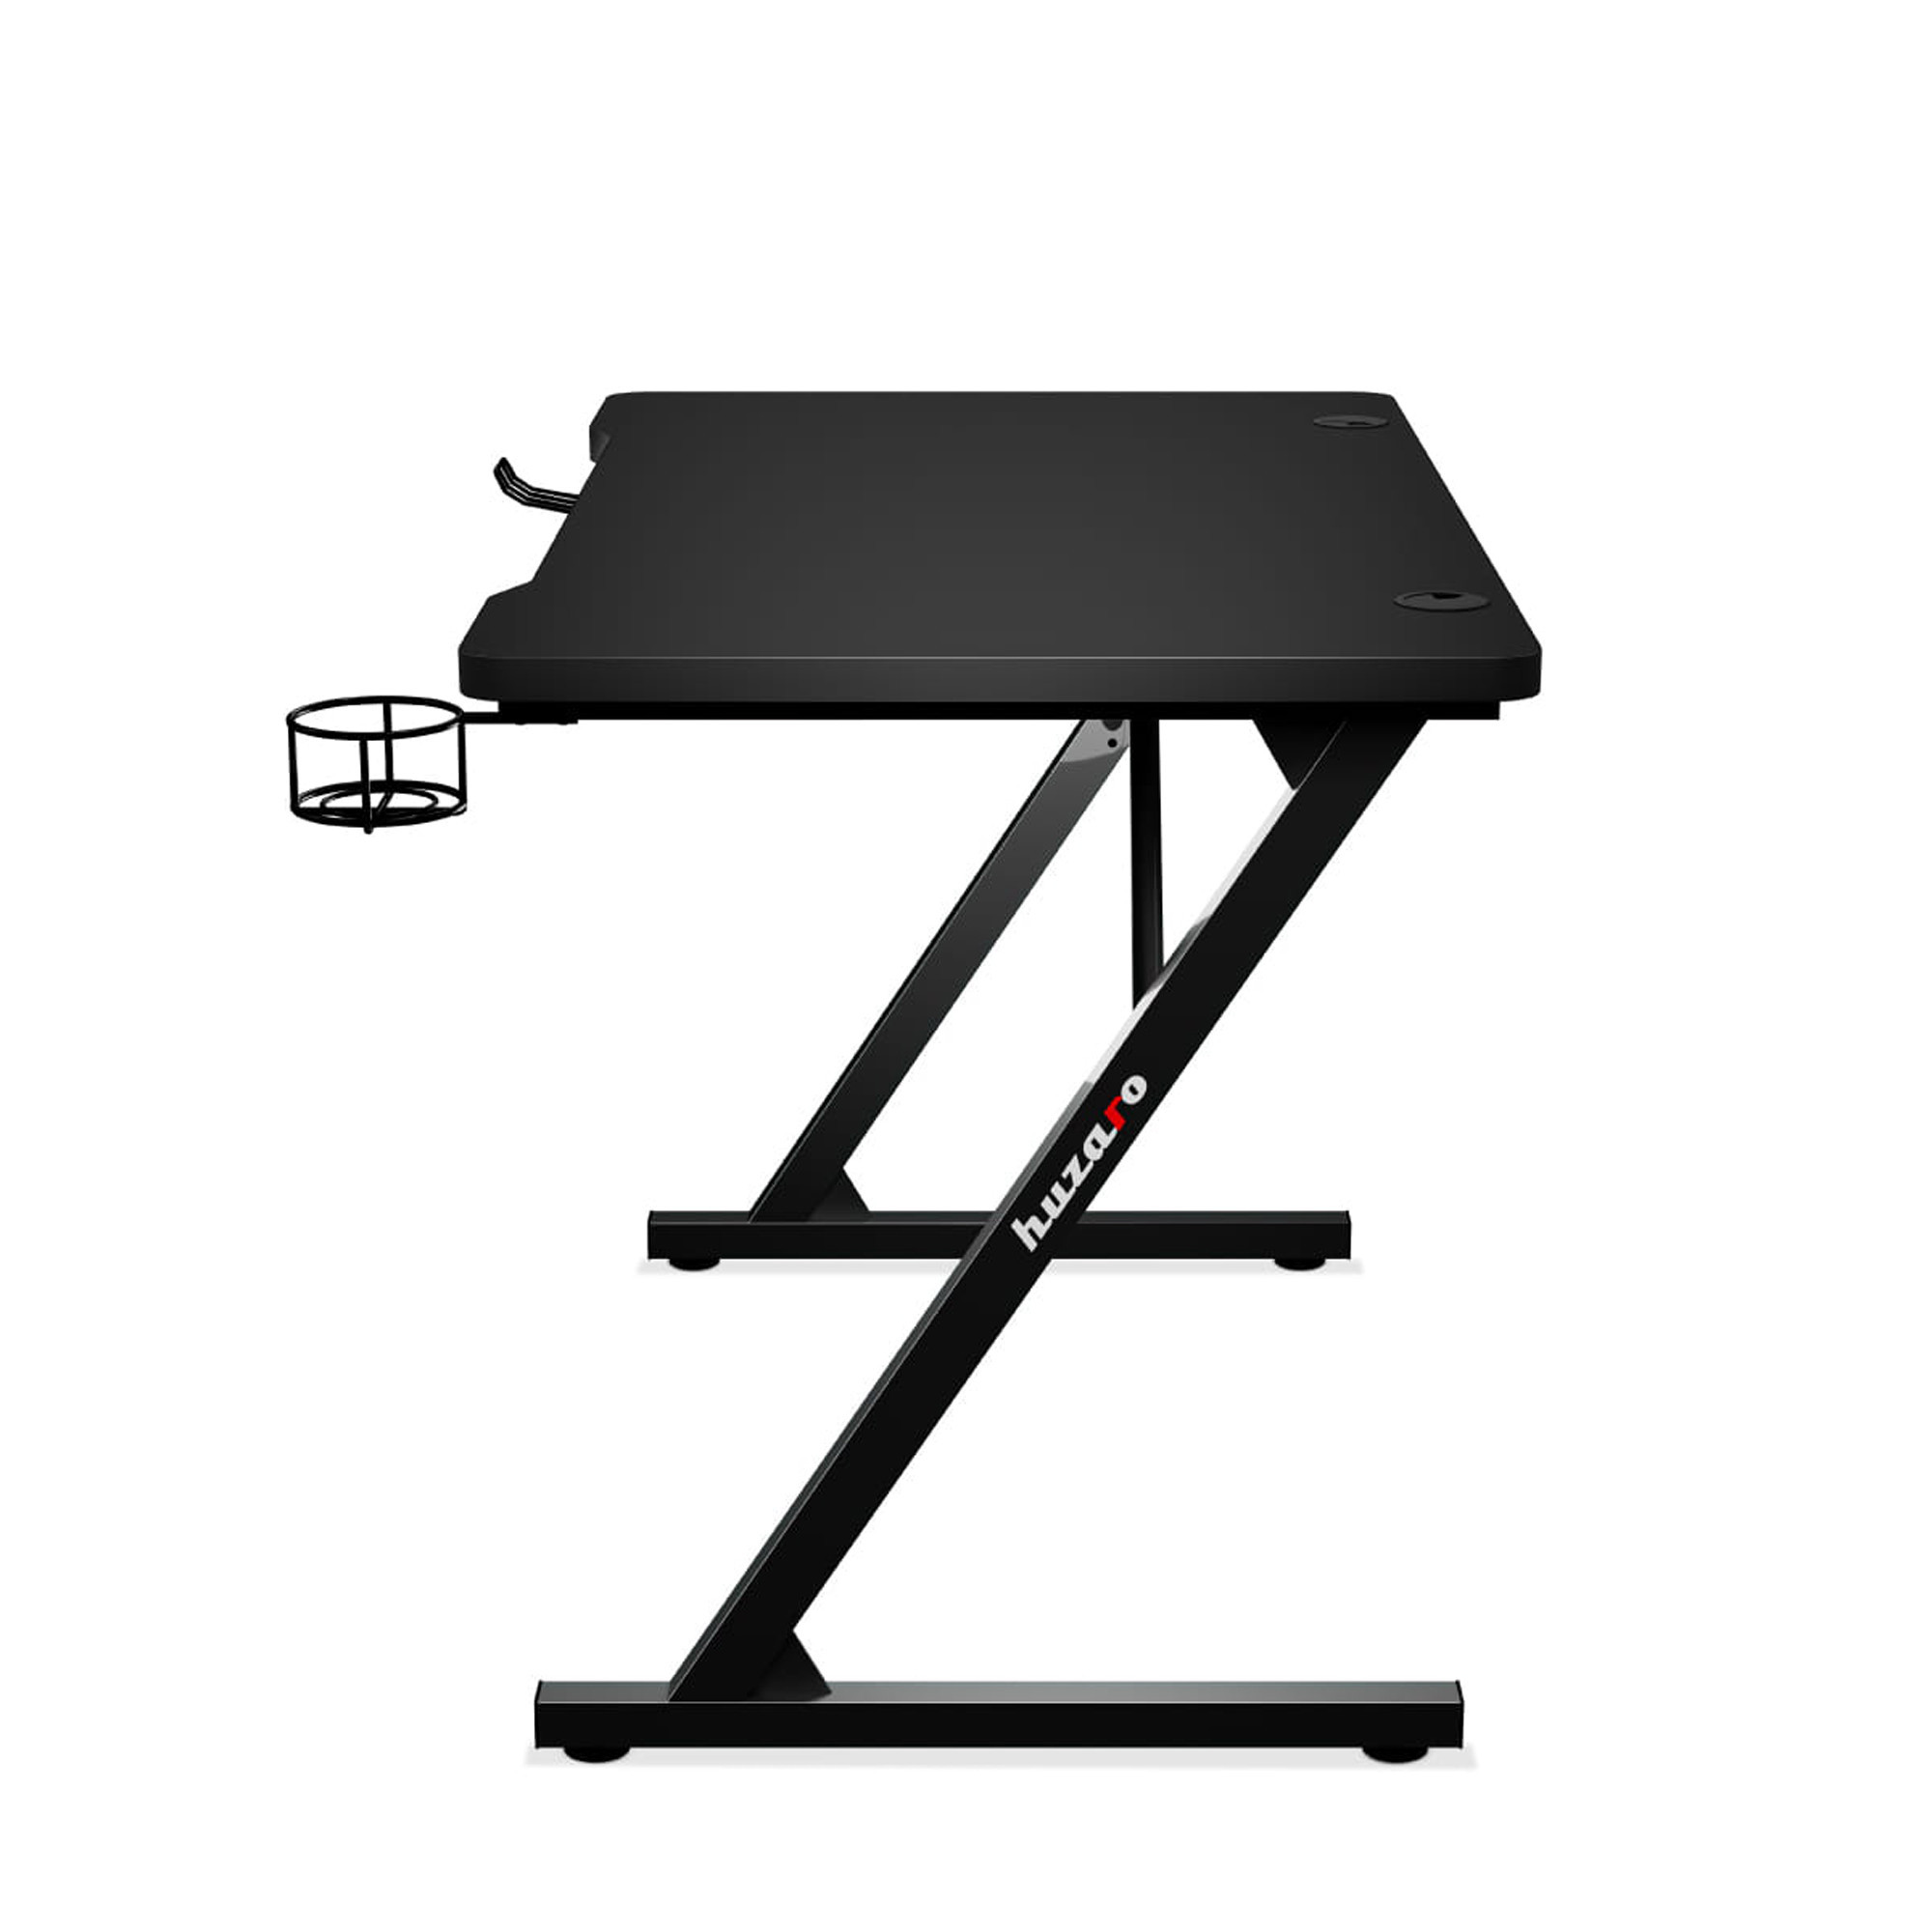 Herný stôl Hero - 1.8 čierny